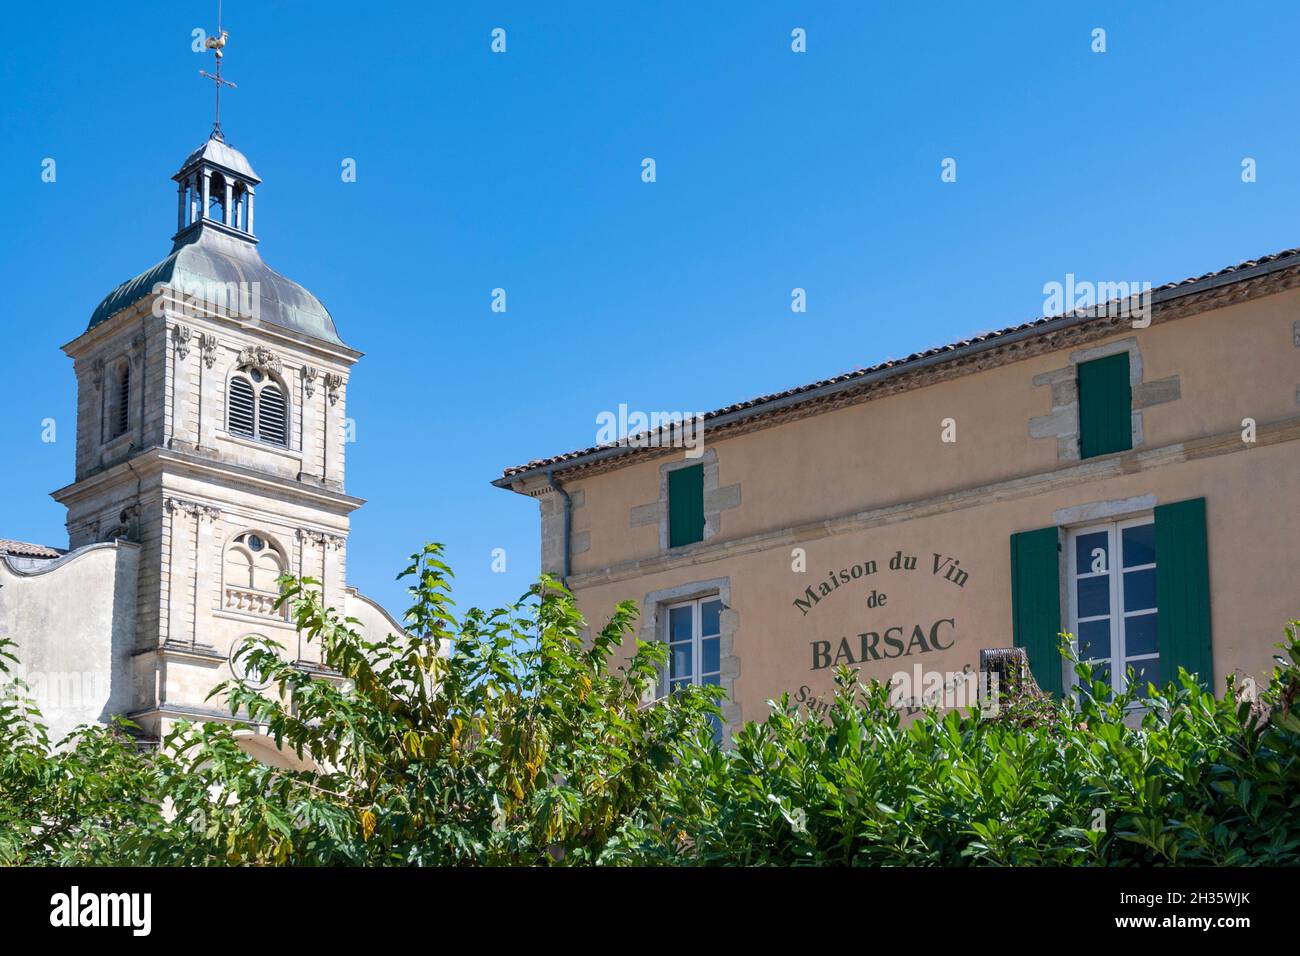 The maison du vin de Barsac and the parish church of Barsac, Stock Photo